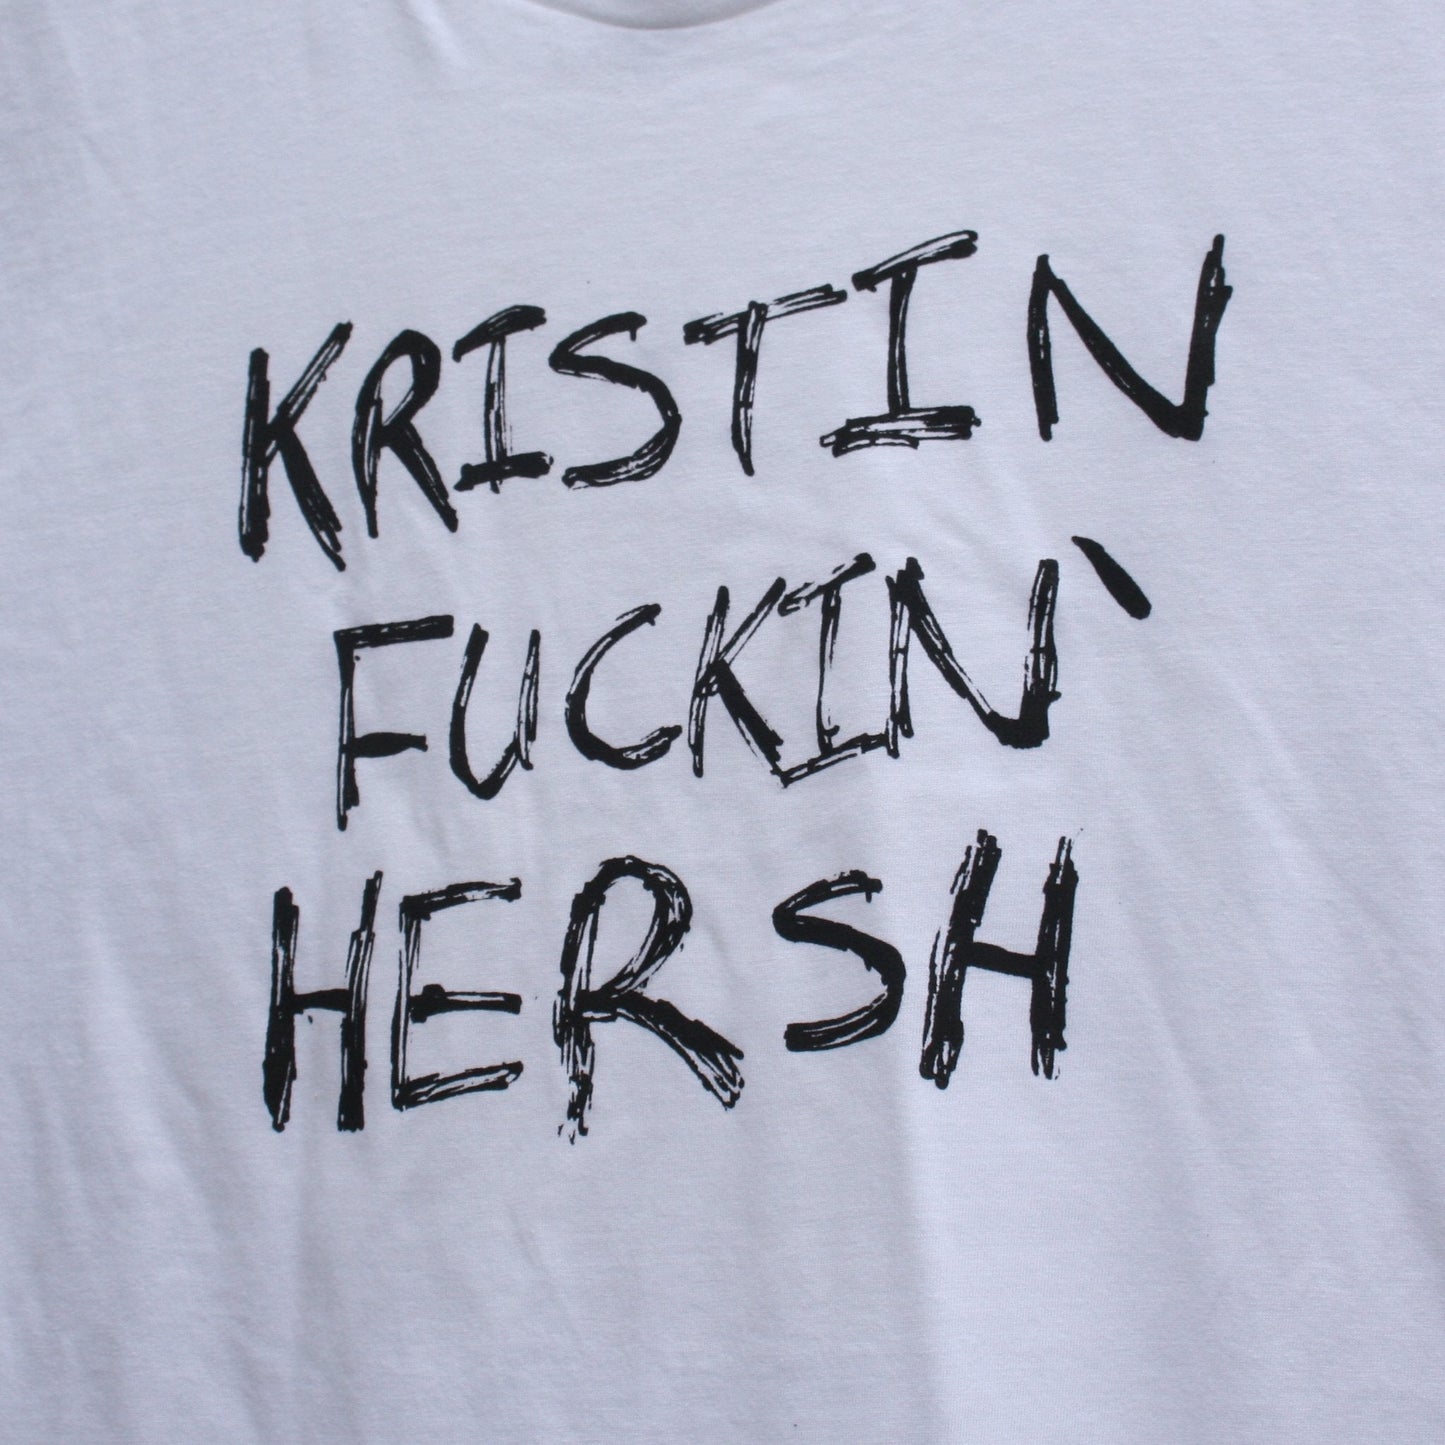 KFH "Kristin F****n' Hersh" - Graffiti style Screen printed T-Shirt - ElRatDesigns - T Shirt